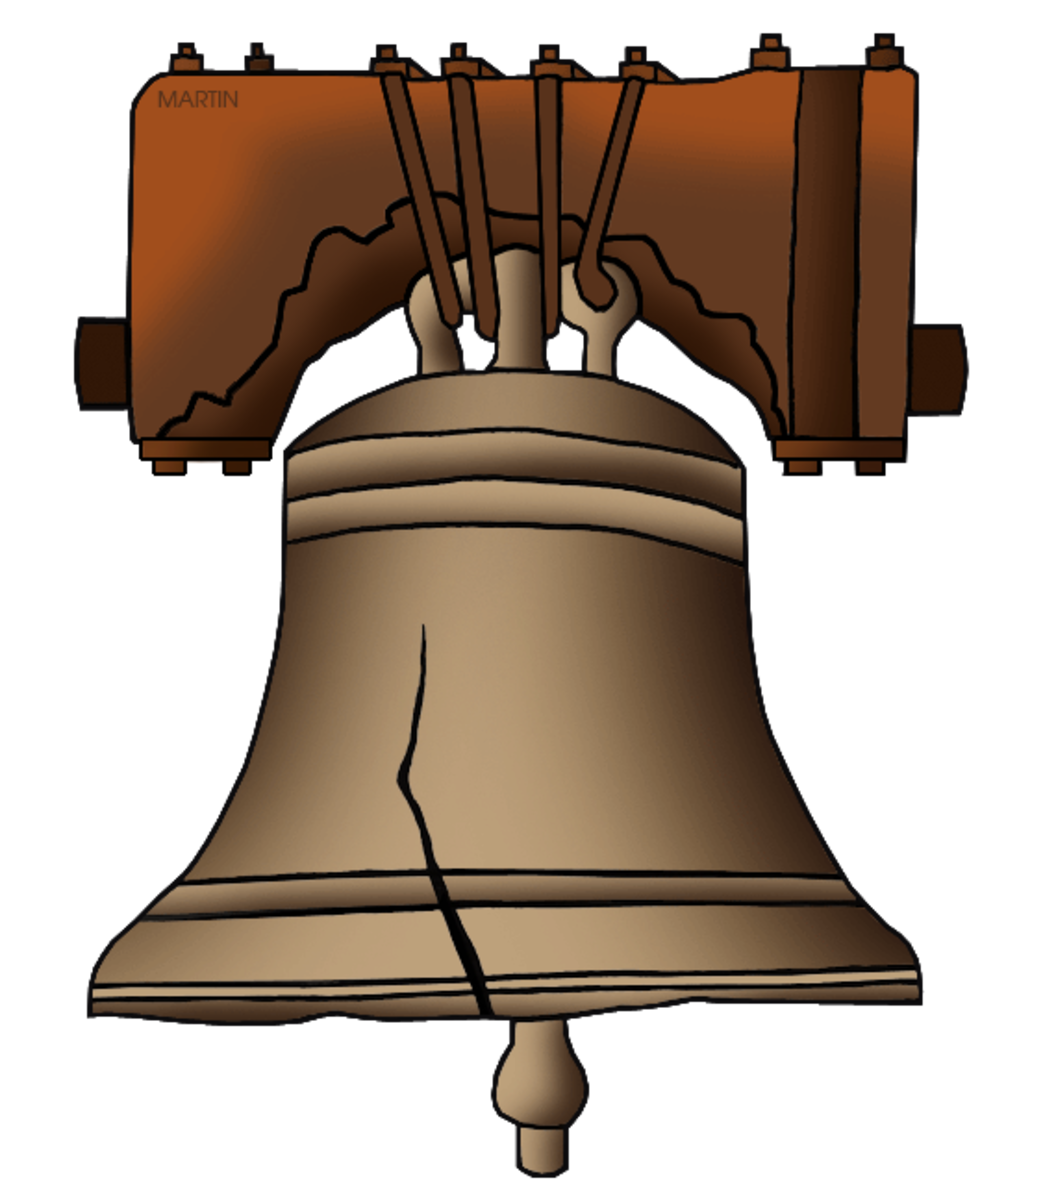 The Liberty Bell, Philadelphia, Pennsylvania